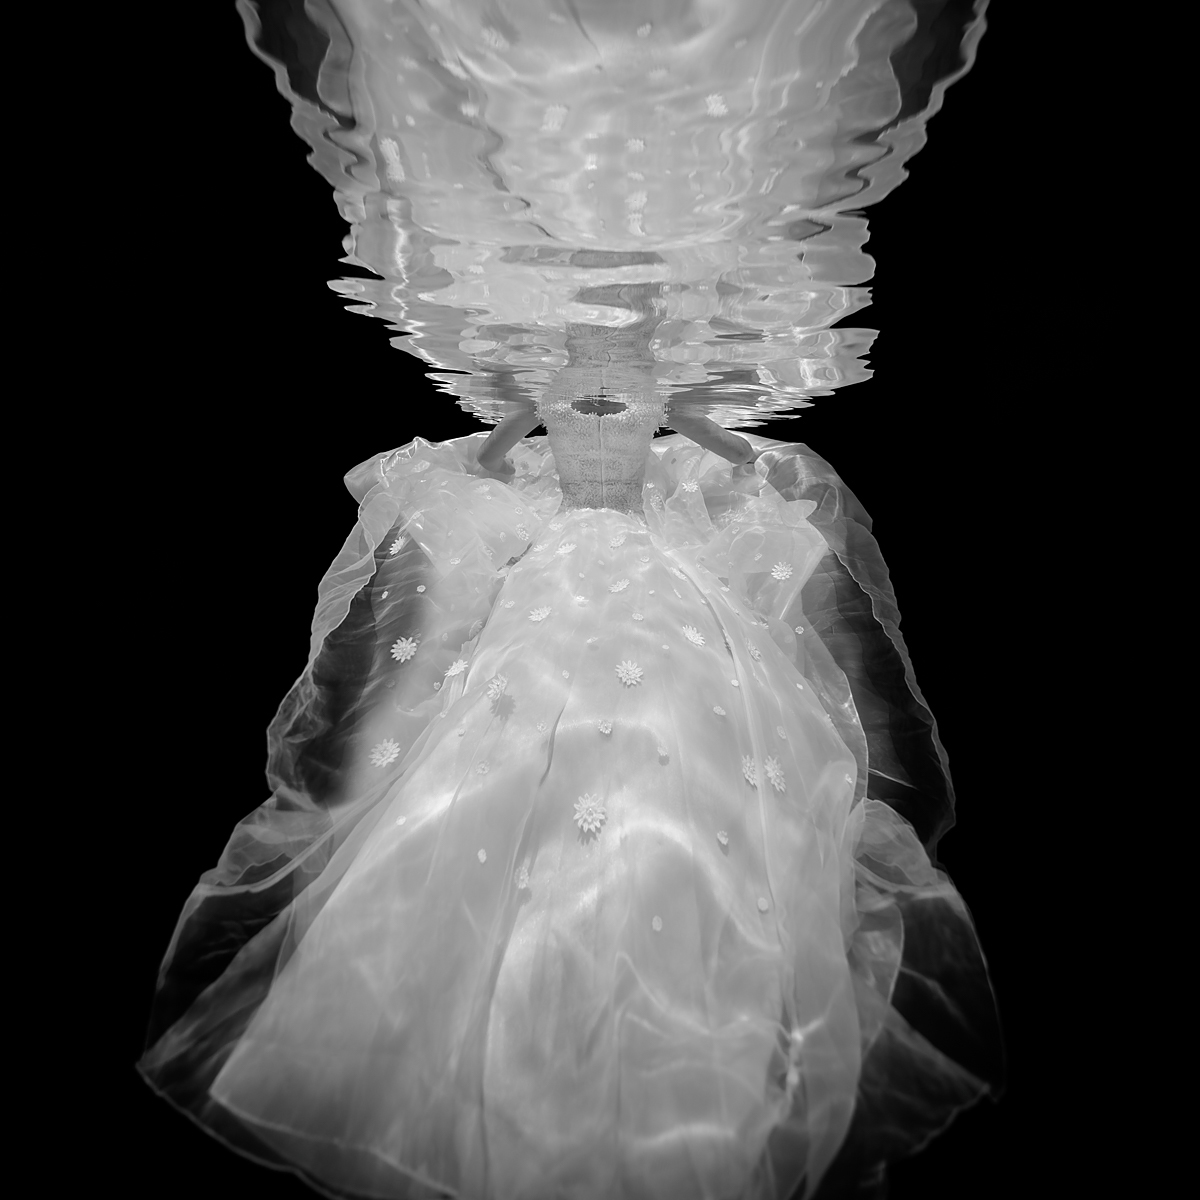 Underwater floaty chiffon fabric wedding gown, long train, bride walking away, water reflections, trash the dress shoot, black background.